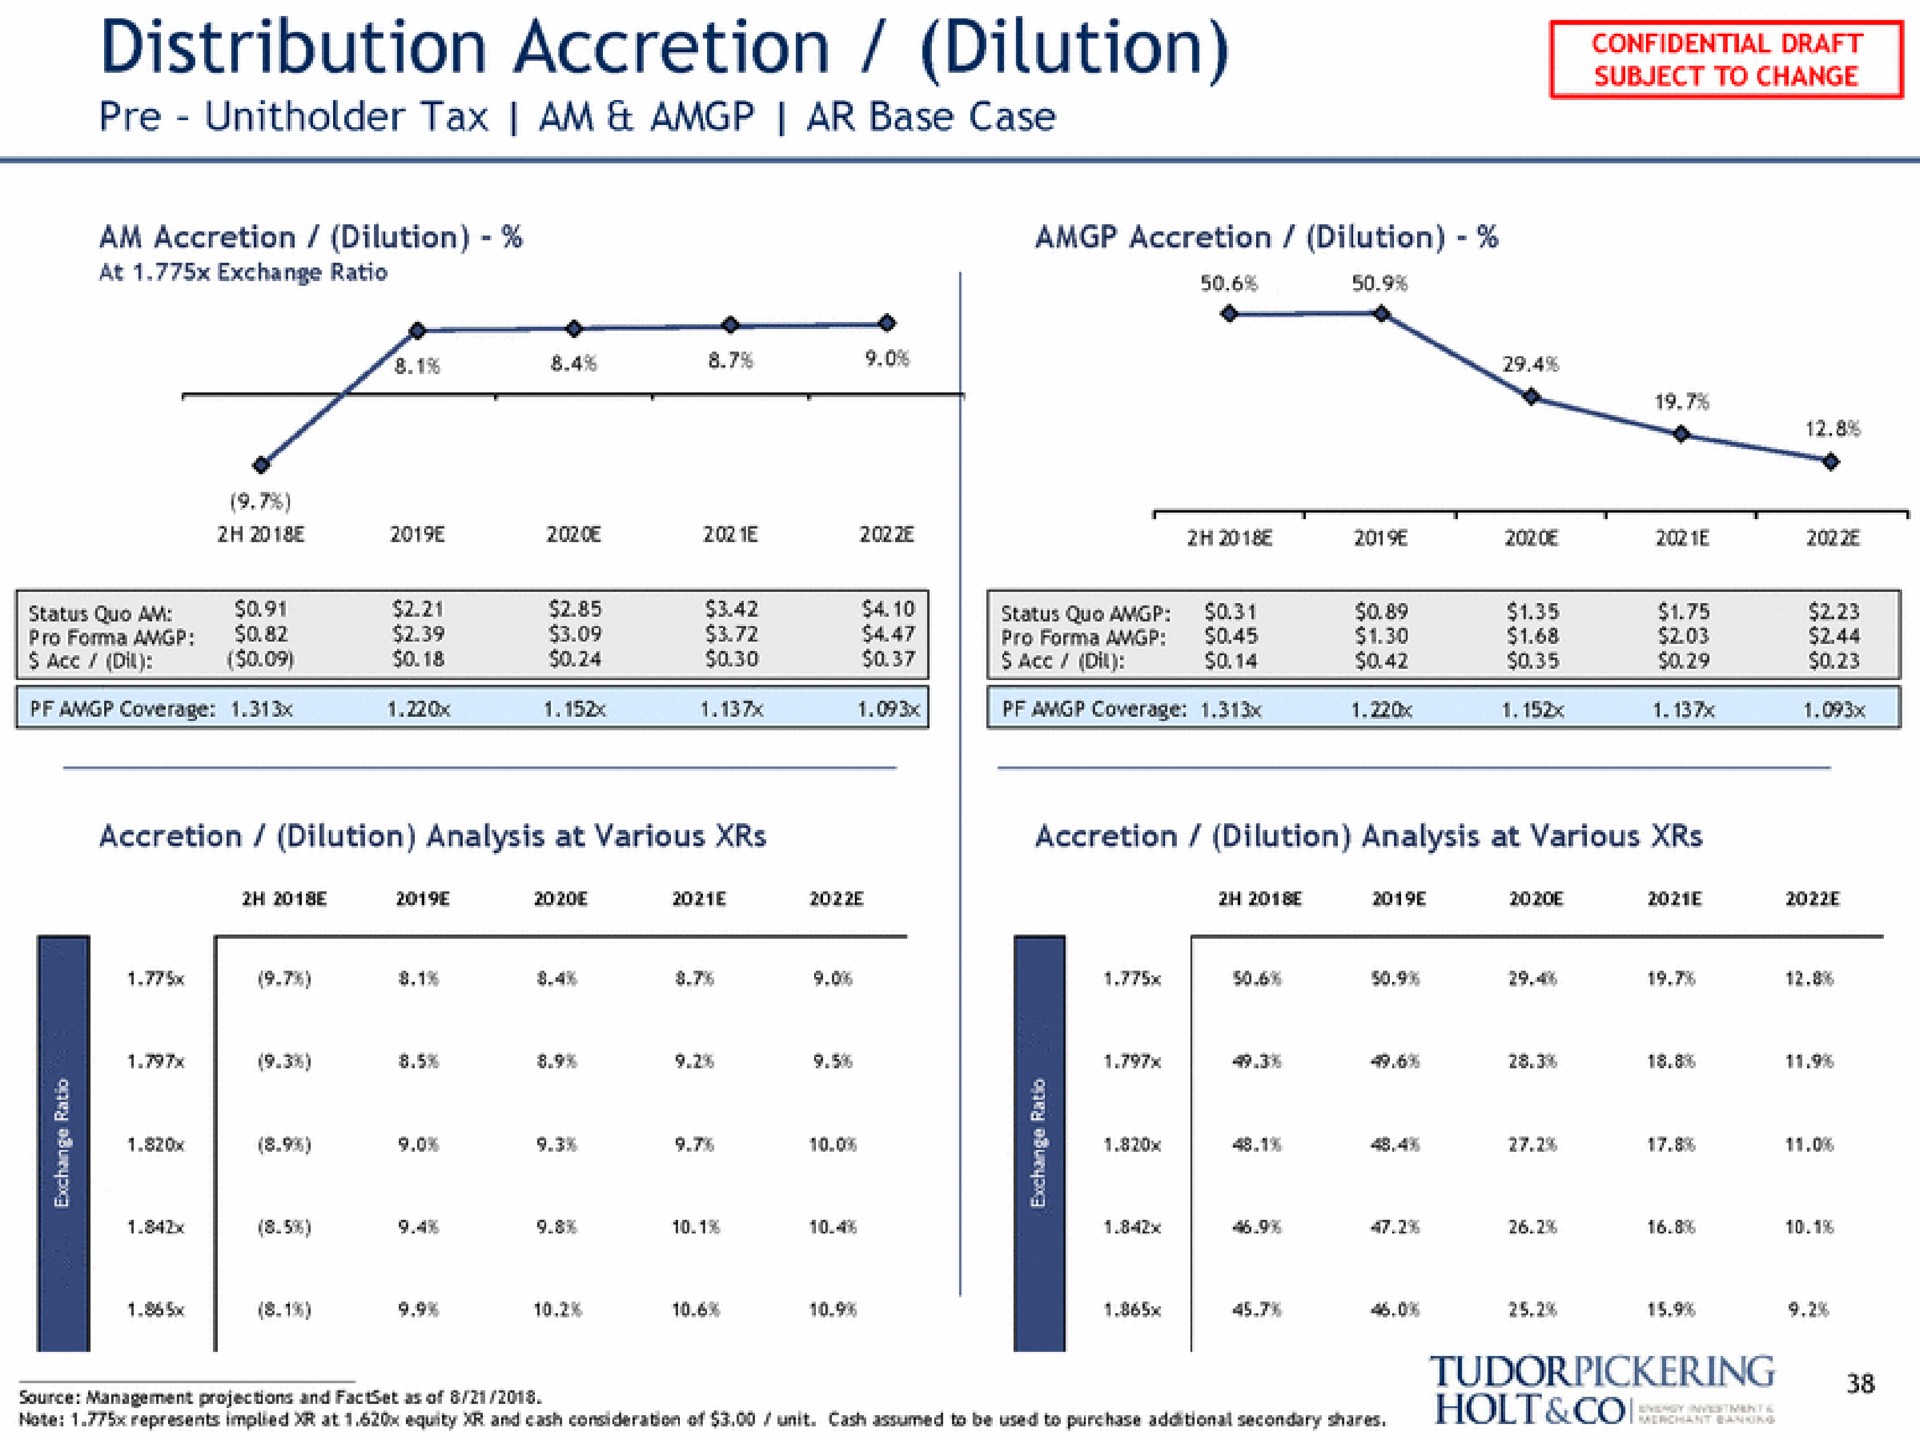 distribution accretion dilution | Tudor, Pickering, Holt & Co